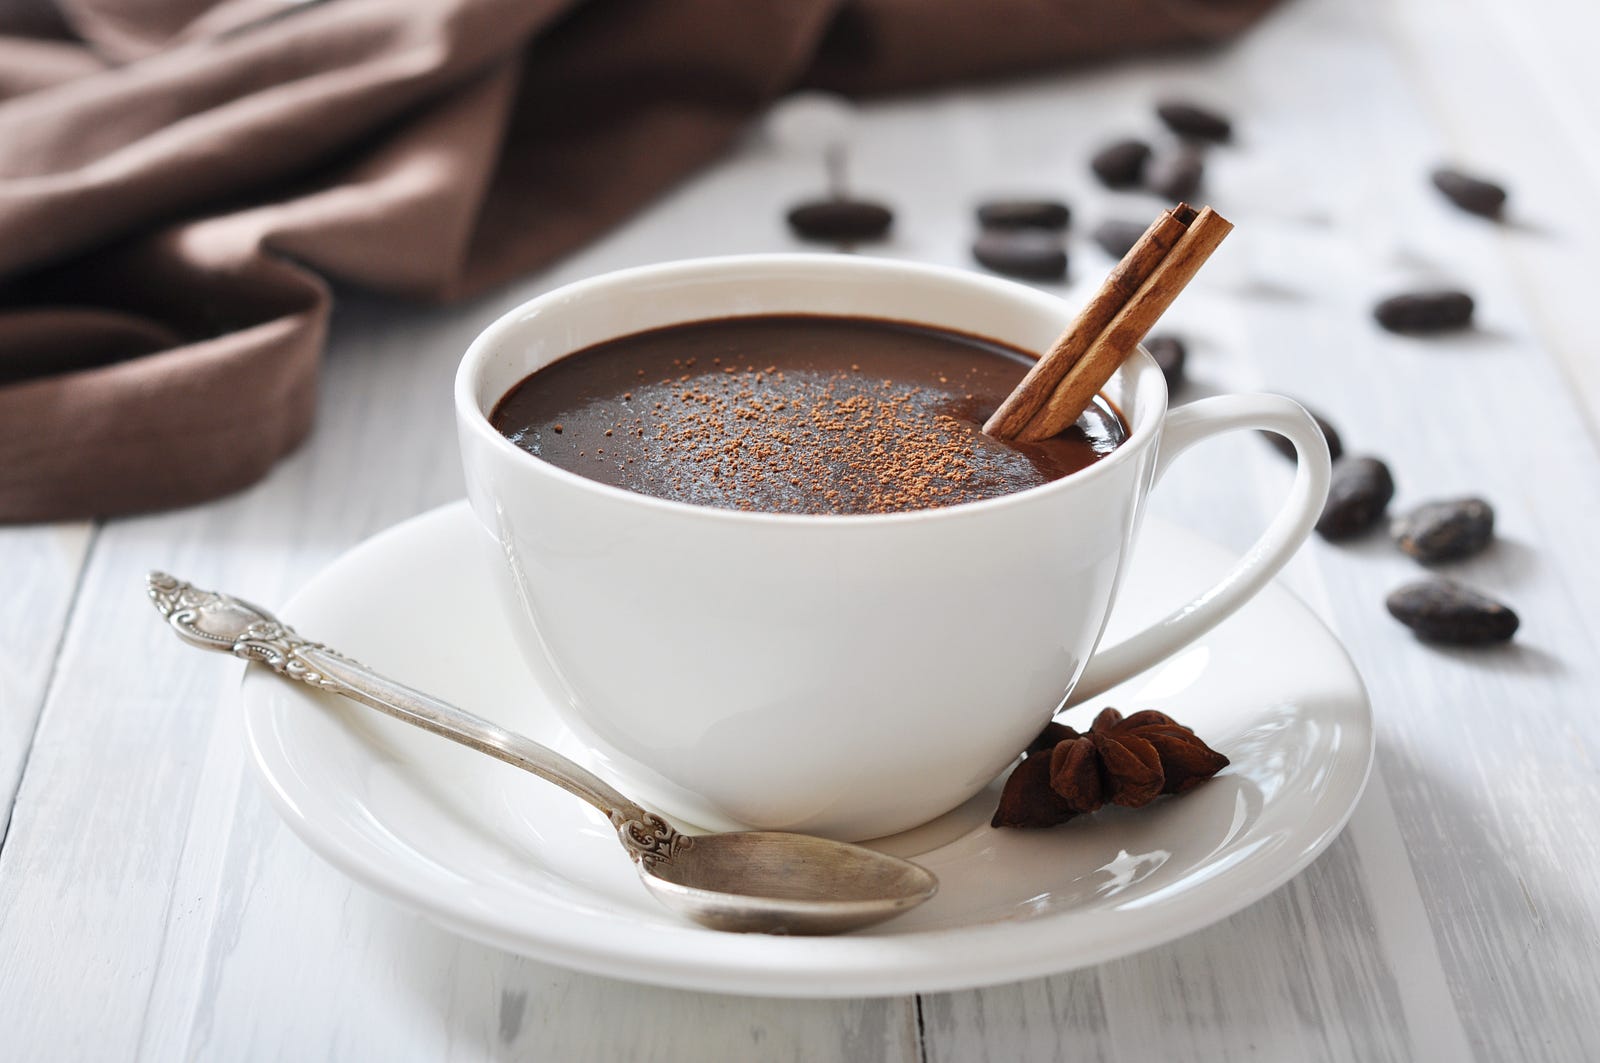 Drink dark hot chocolate for heart health.